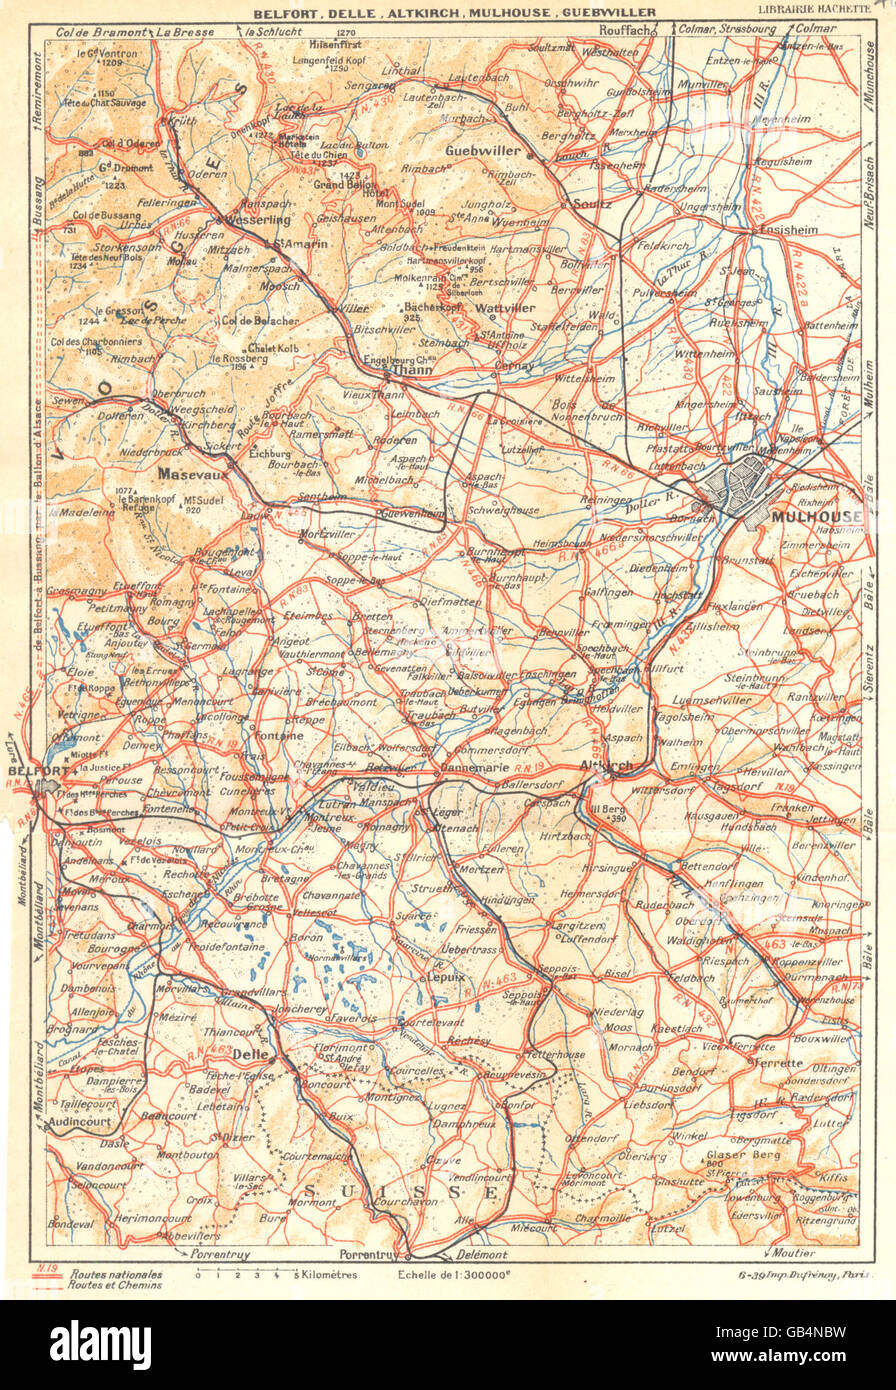 HAUT- RHIN : Belfort, Delle, Altkirch, Mulhouse, Guebwiller, 1939 carte vintage Banque D'Images